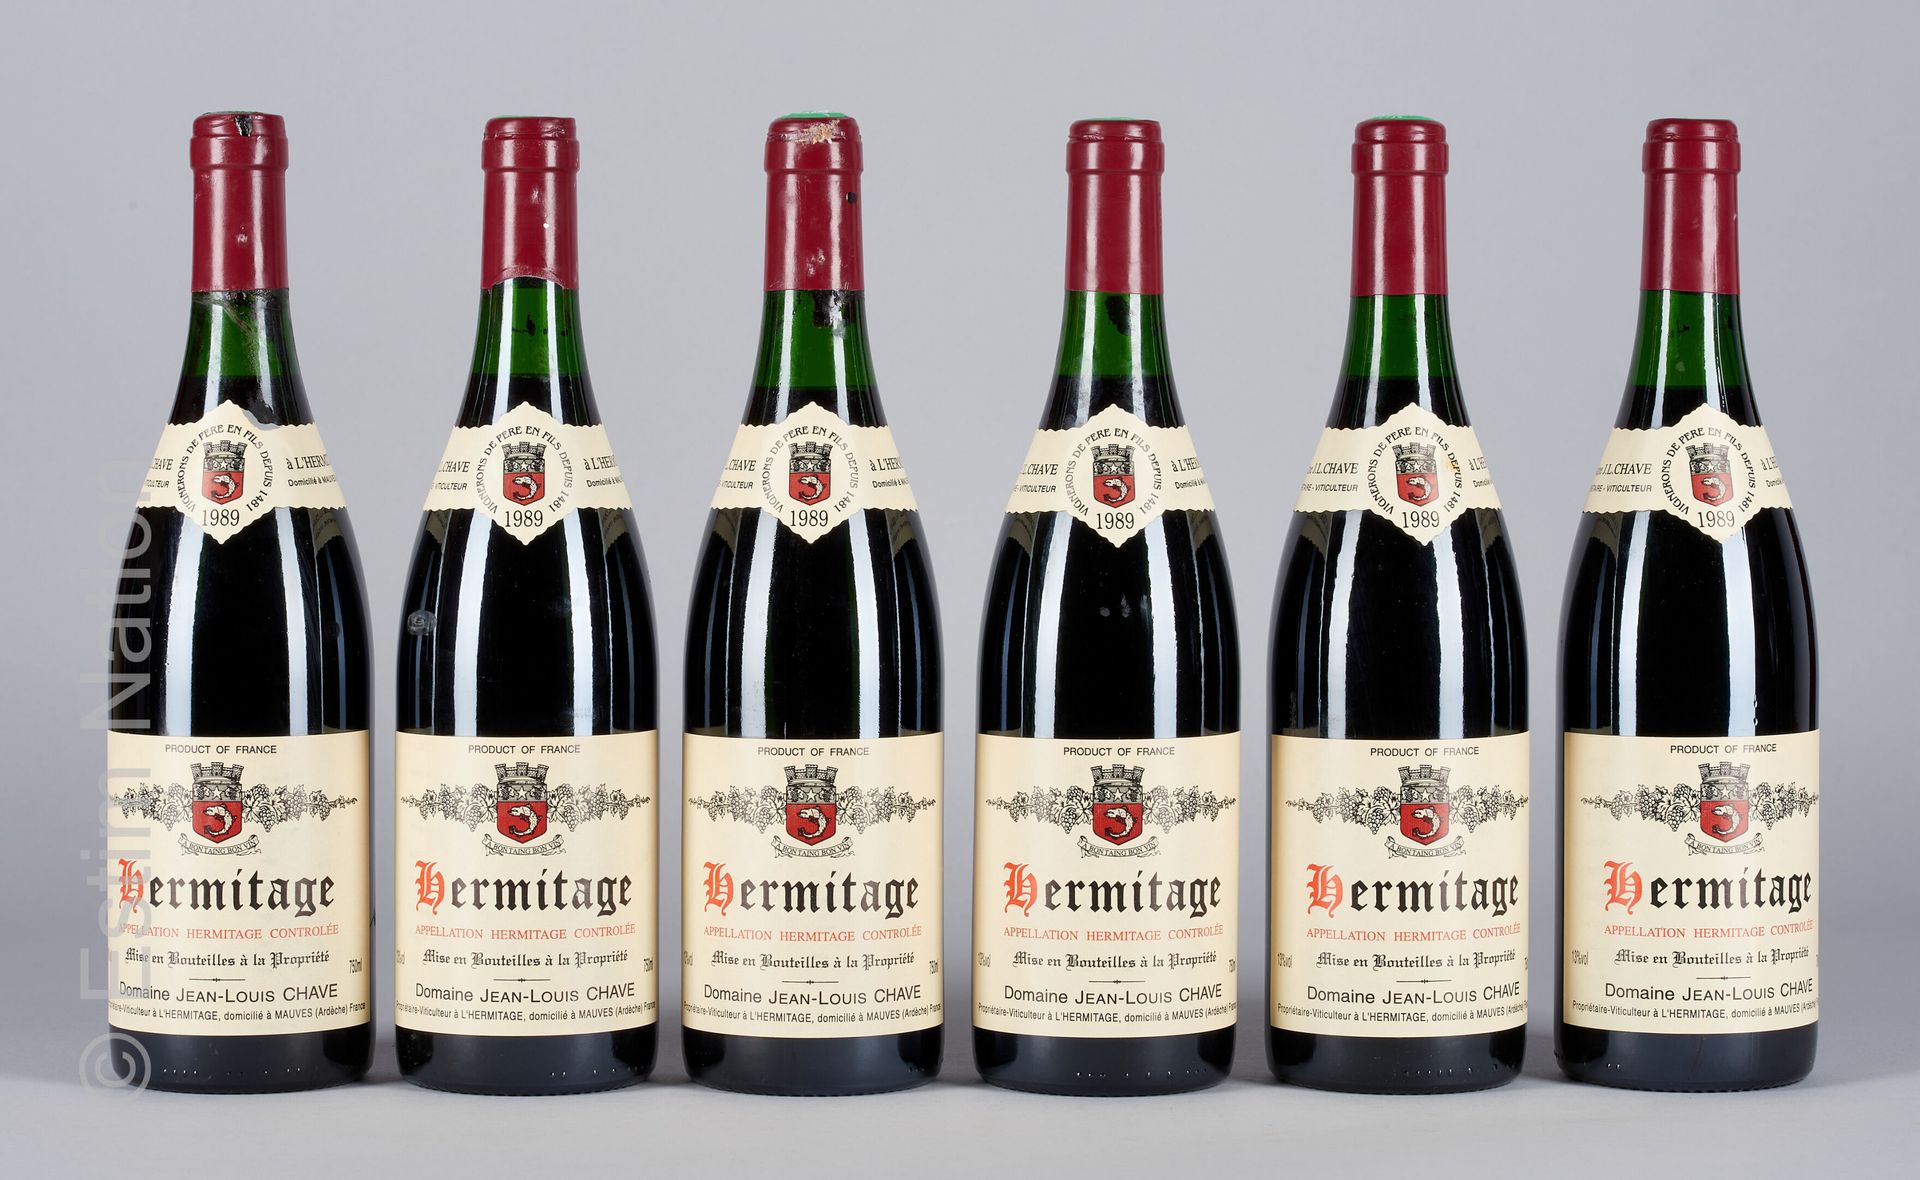 HERMITAGE ROUGE 6 bouteilles HERMITAGE 1989 Jean-Louis Chave

(N. Entre 2,5 et 3&hellip;